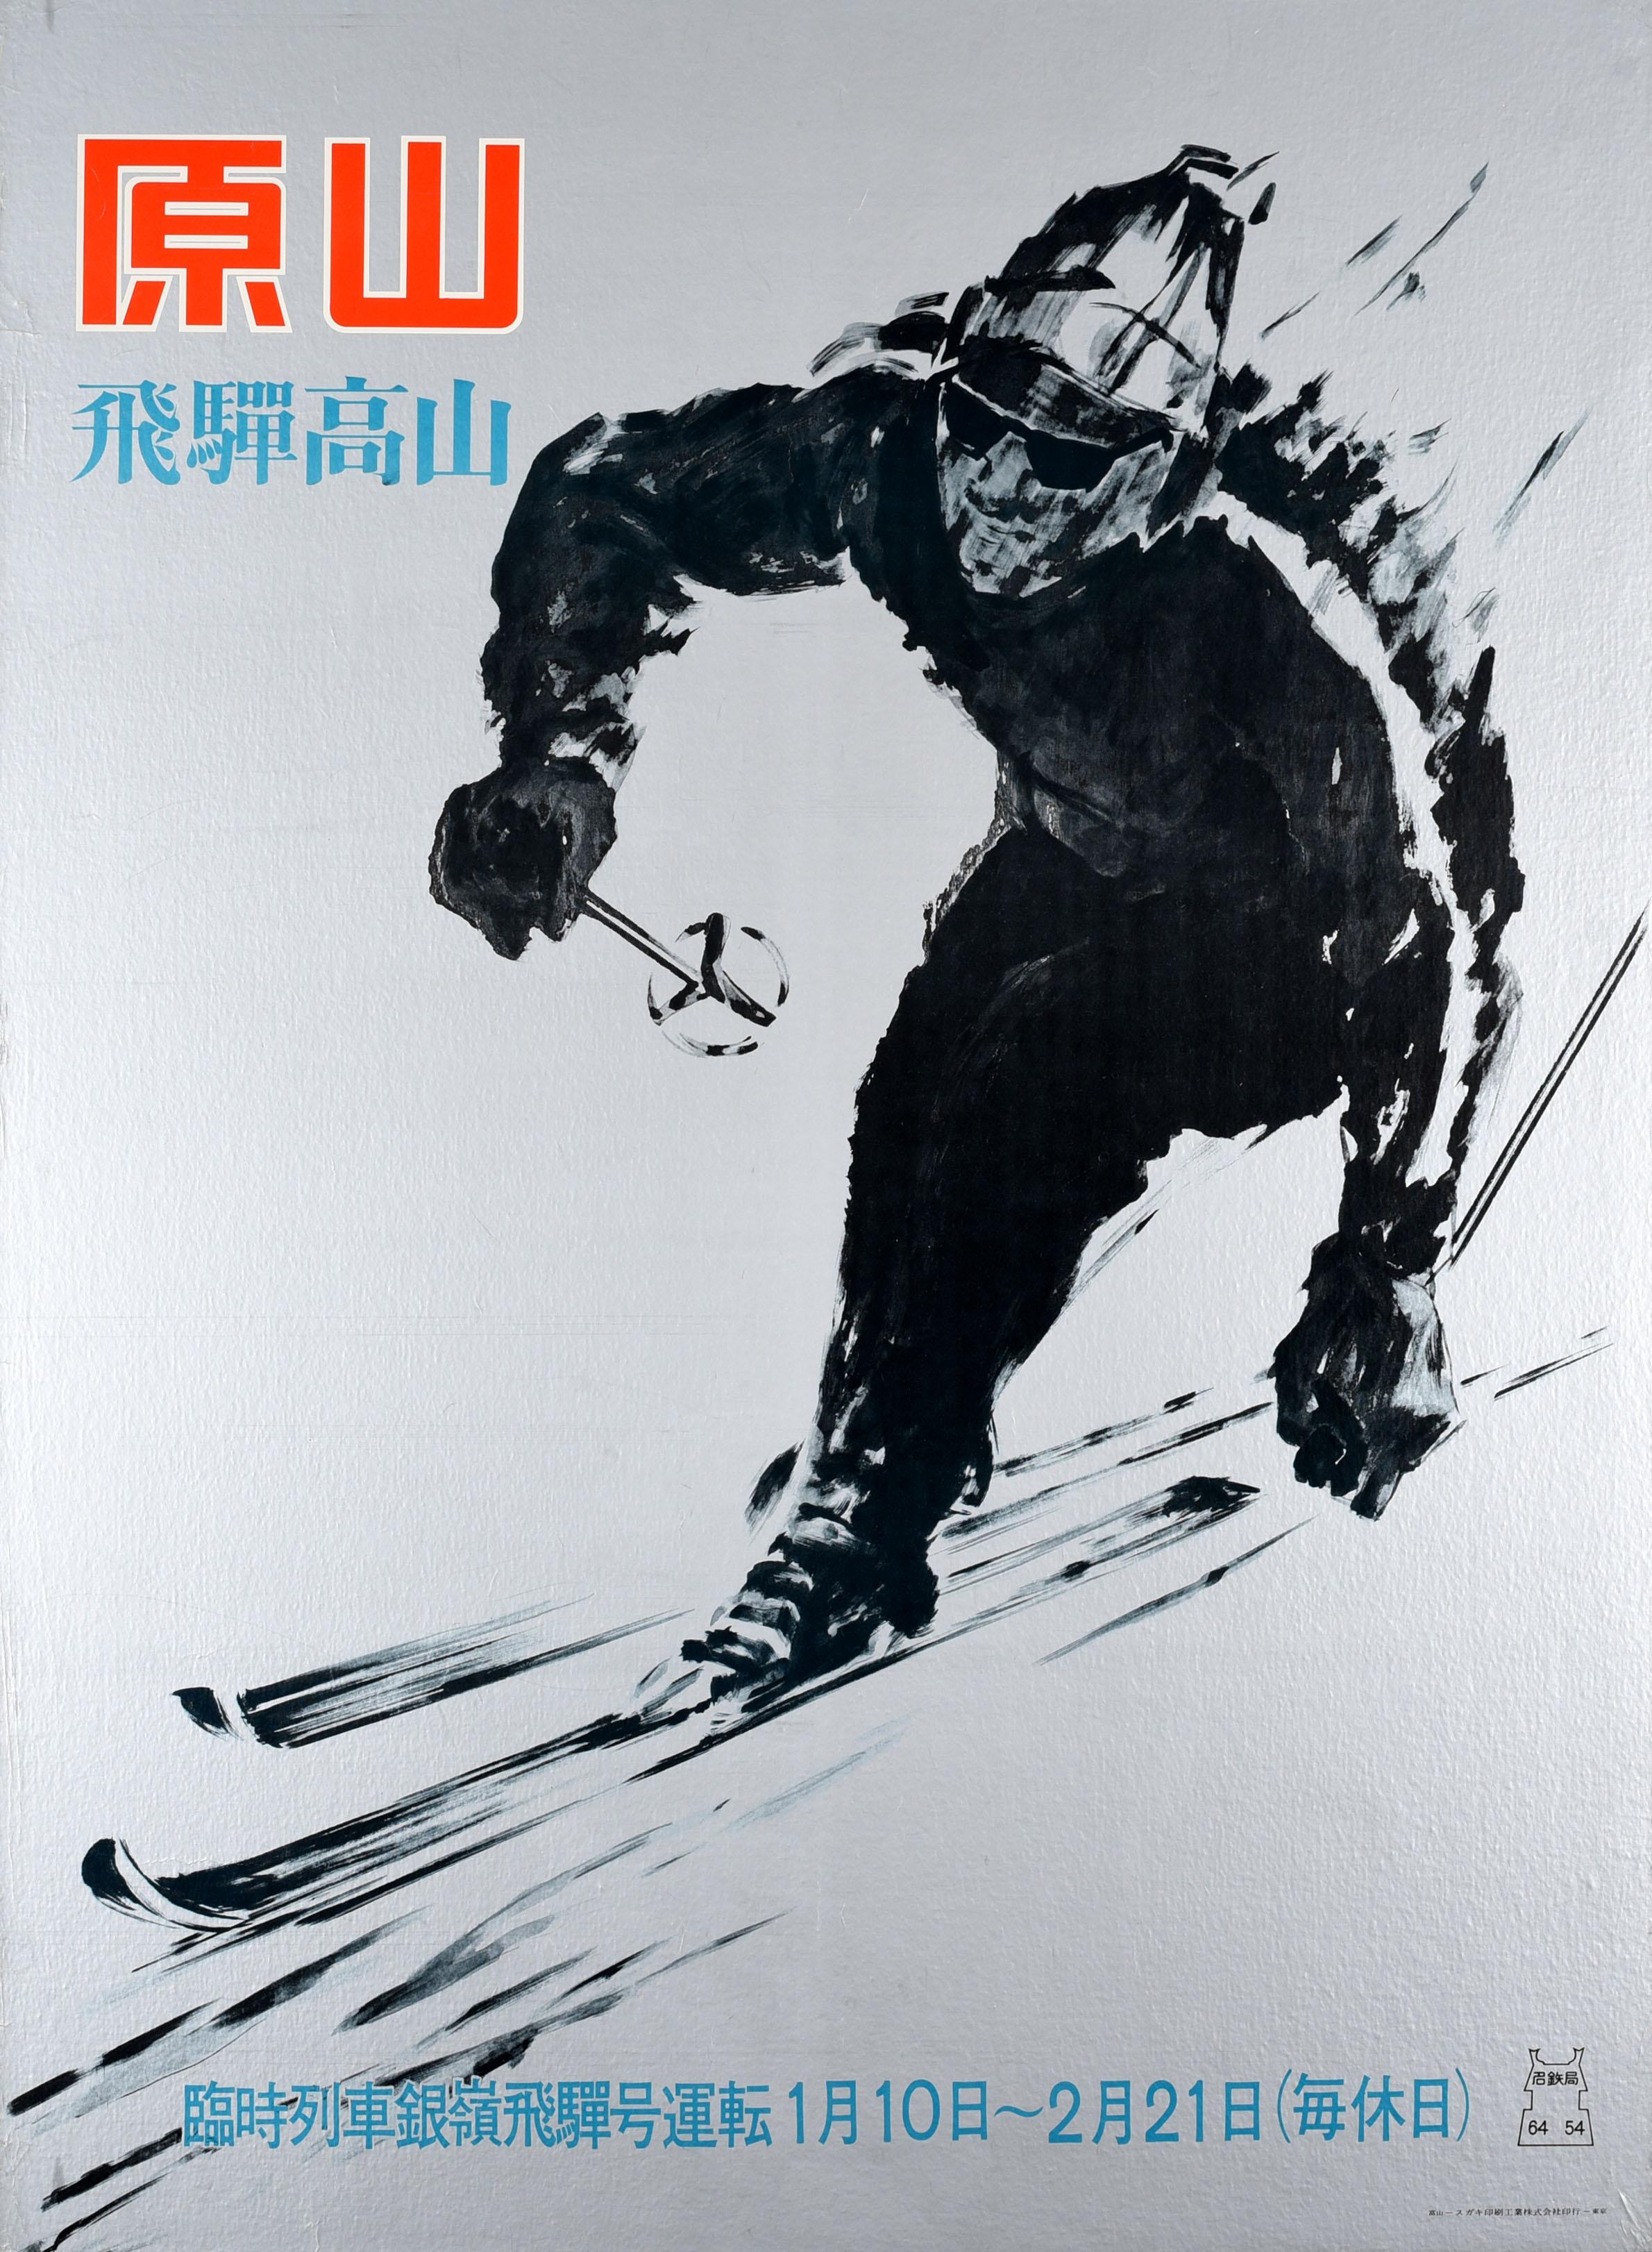 Unknown Print - Original Vintage Winter Sport Travel Poster Ski Japan Harayama Hida Takayama